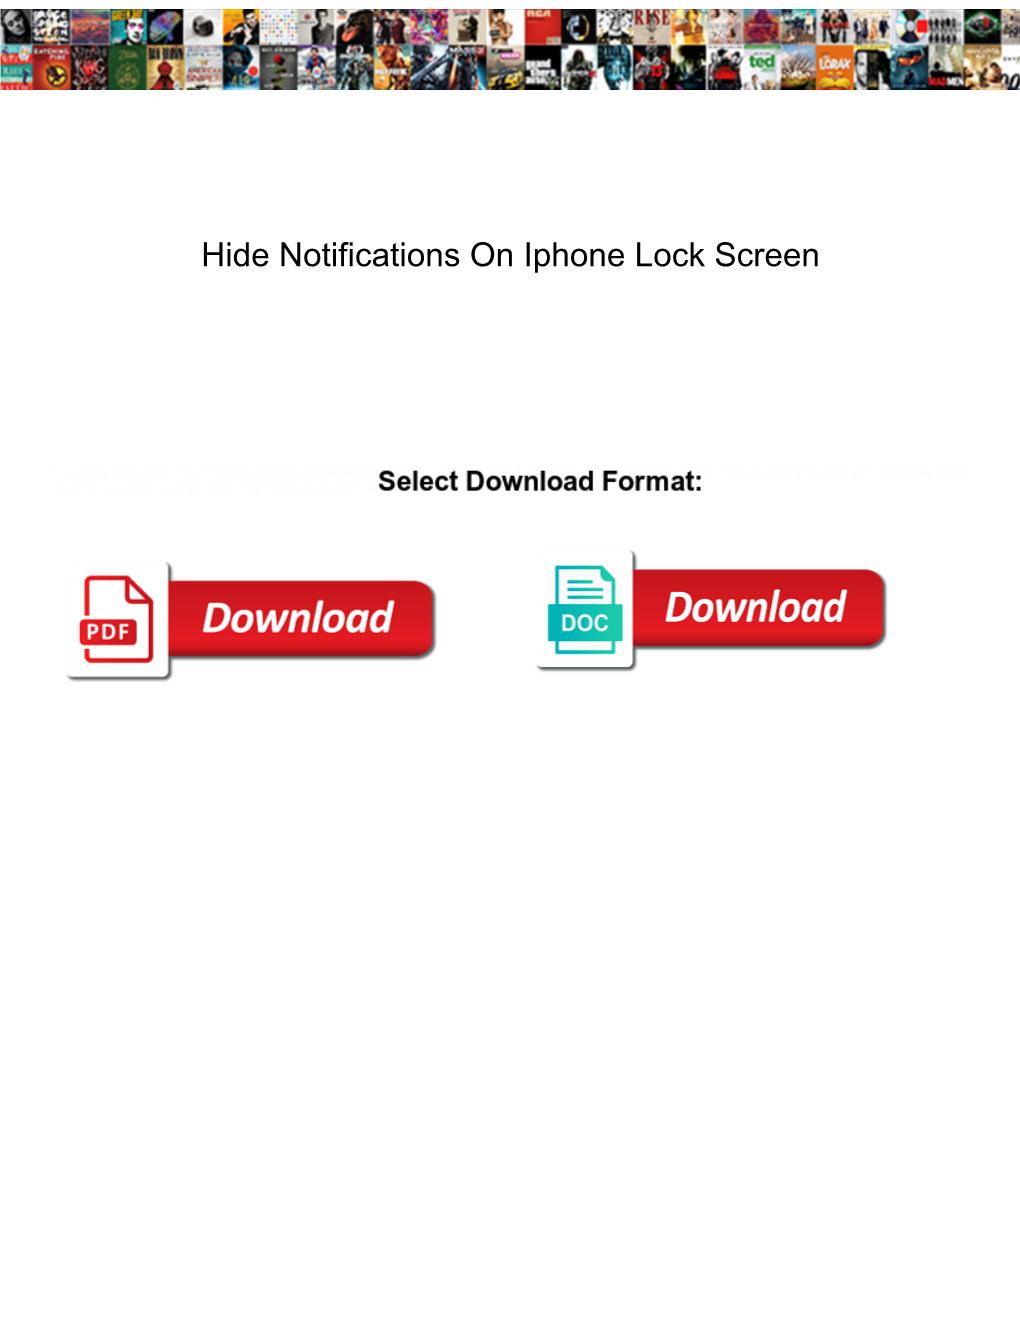 Hide Notifications on Iphone Lock Screen